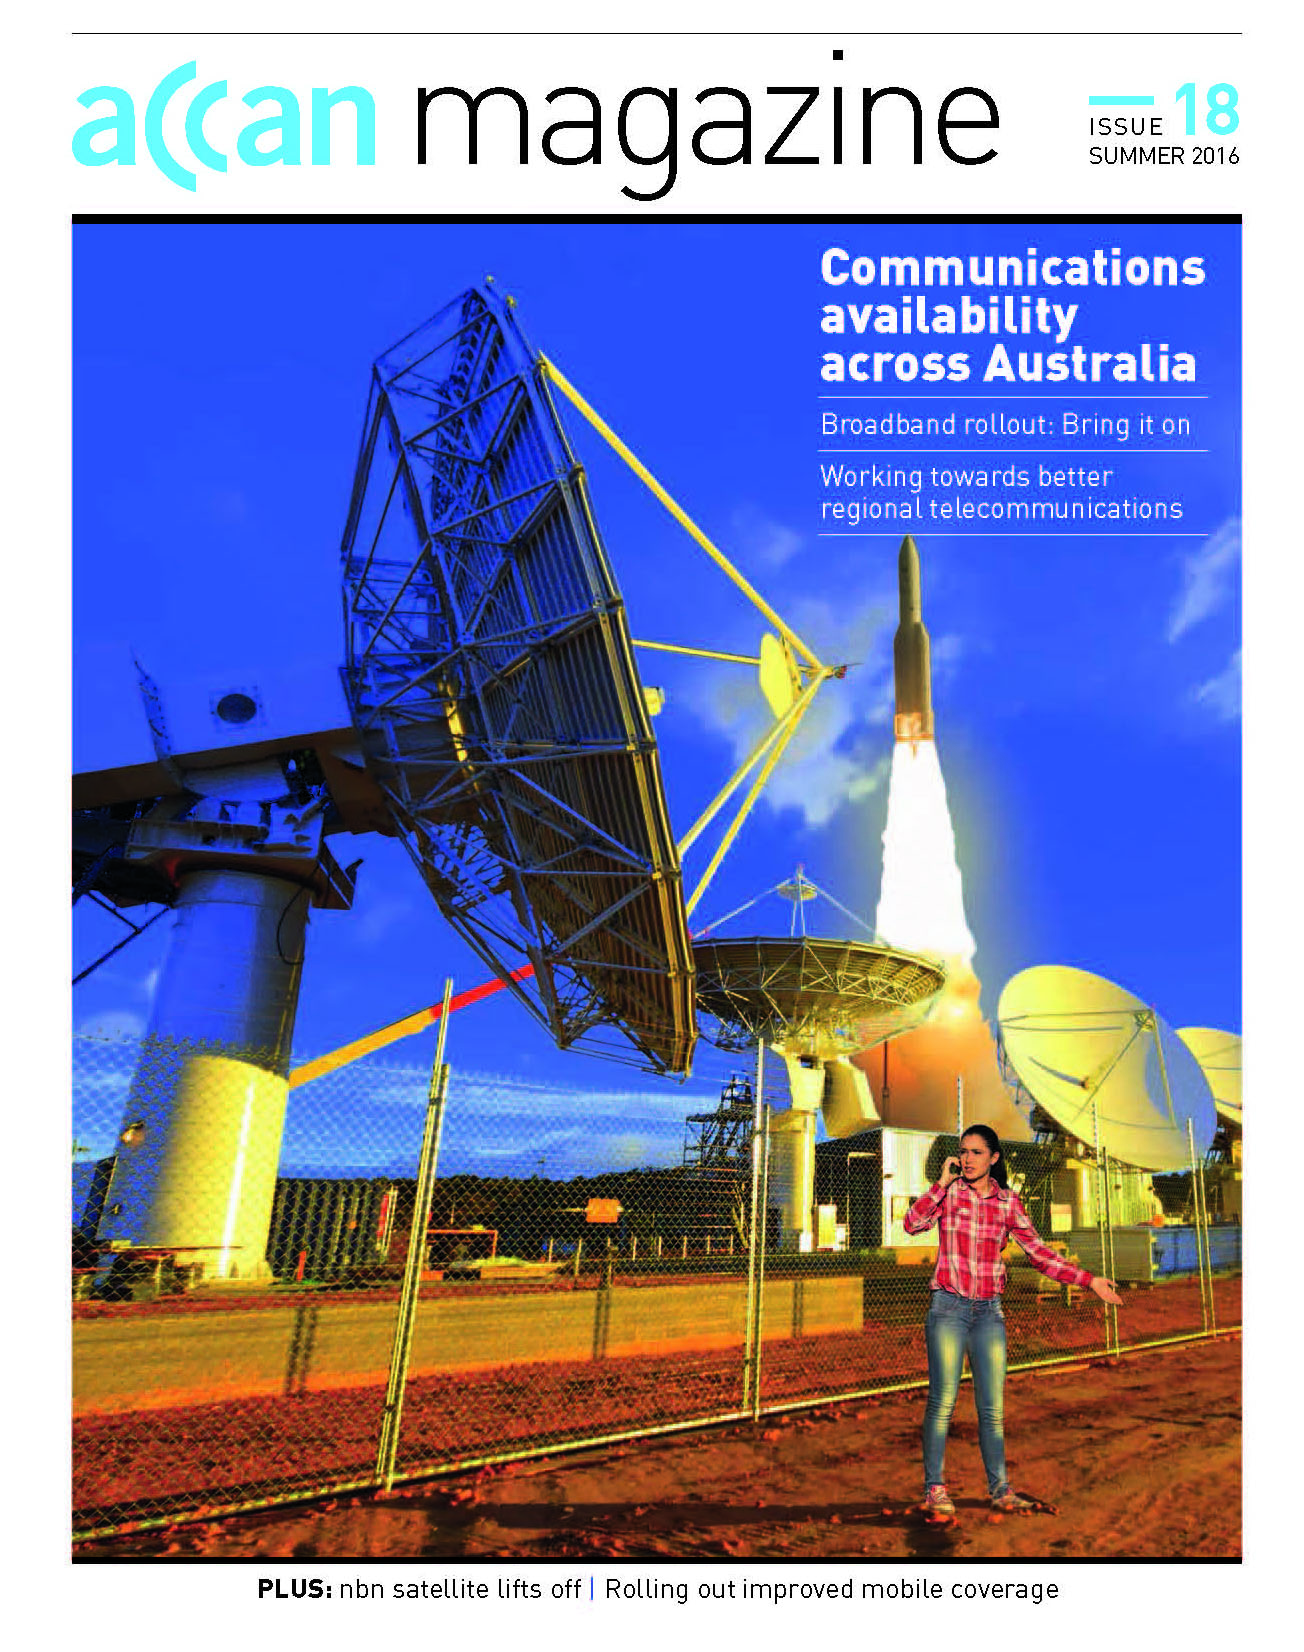 Communications availability across Australia cover